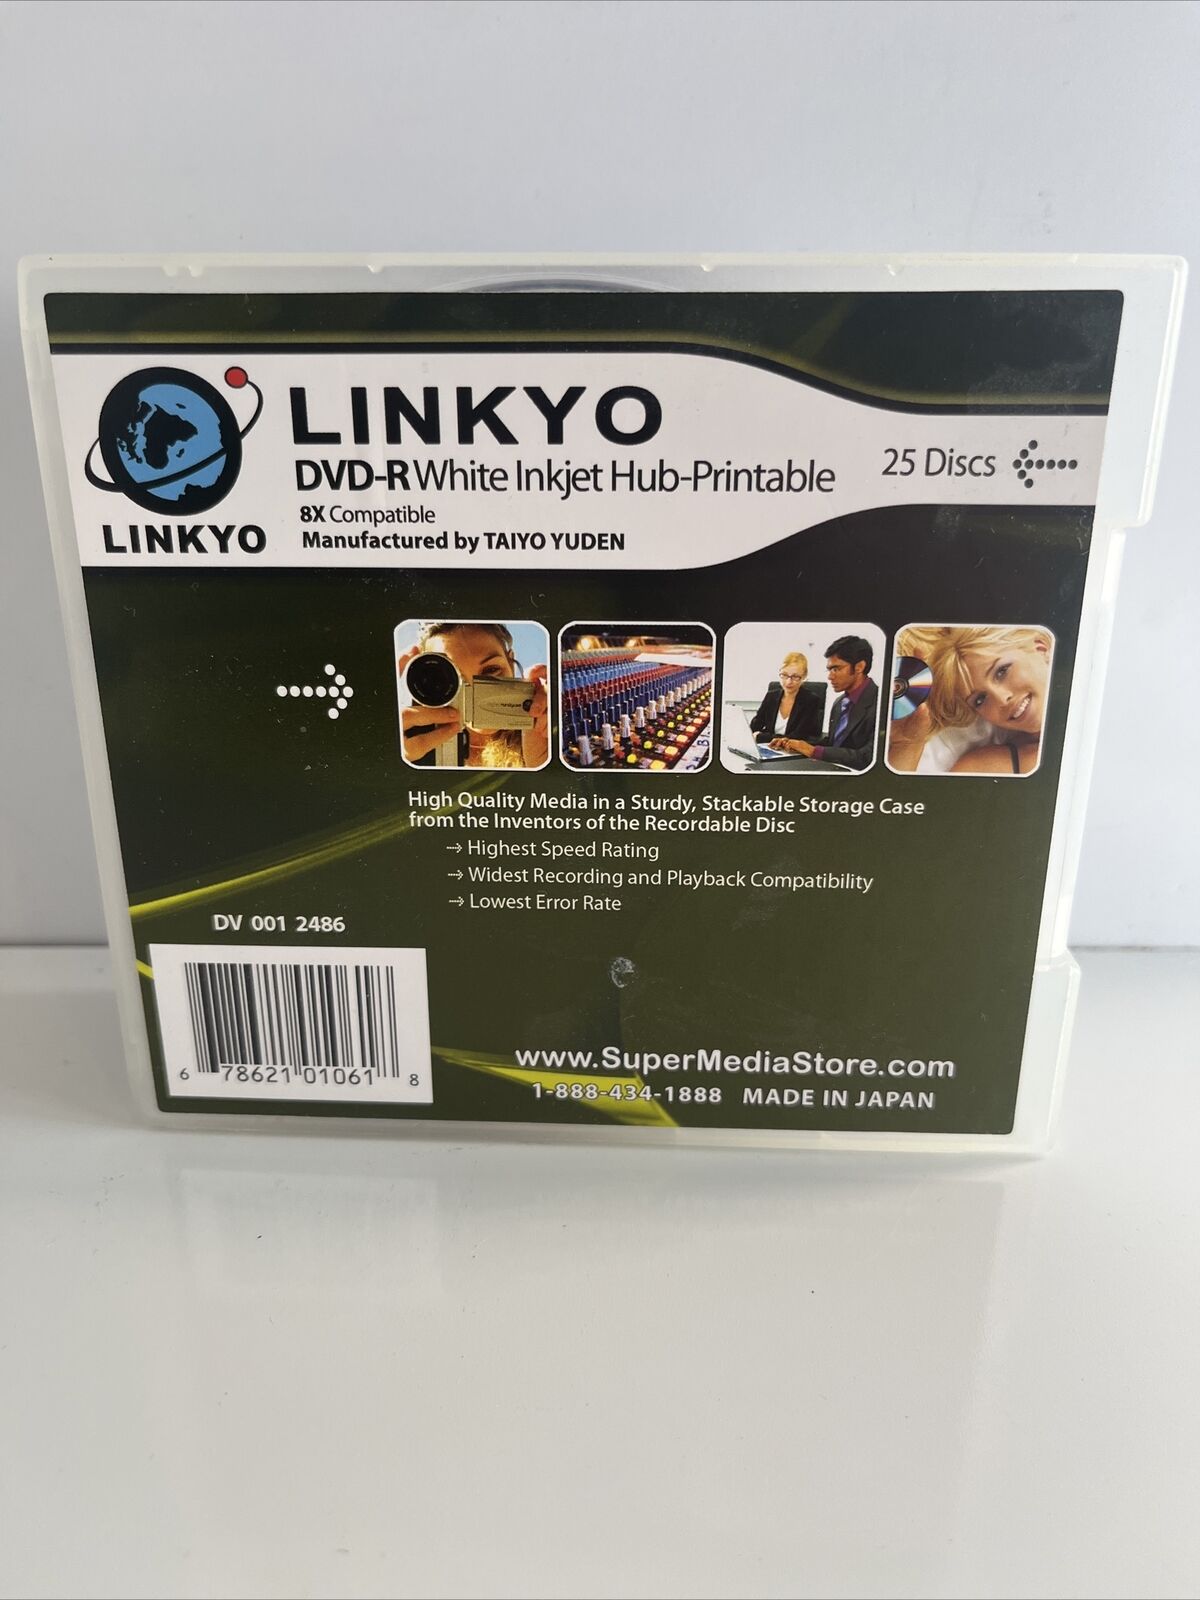 LINKYO DVD-R White Inkjet Hub-Printable 8X Compatible 25 disks